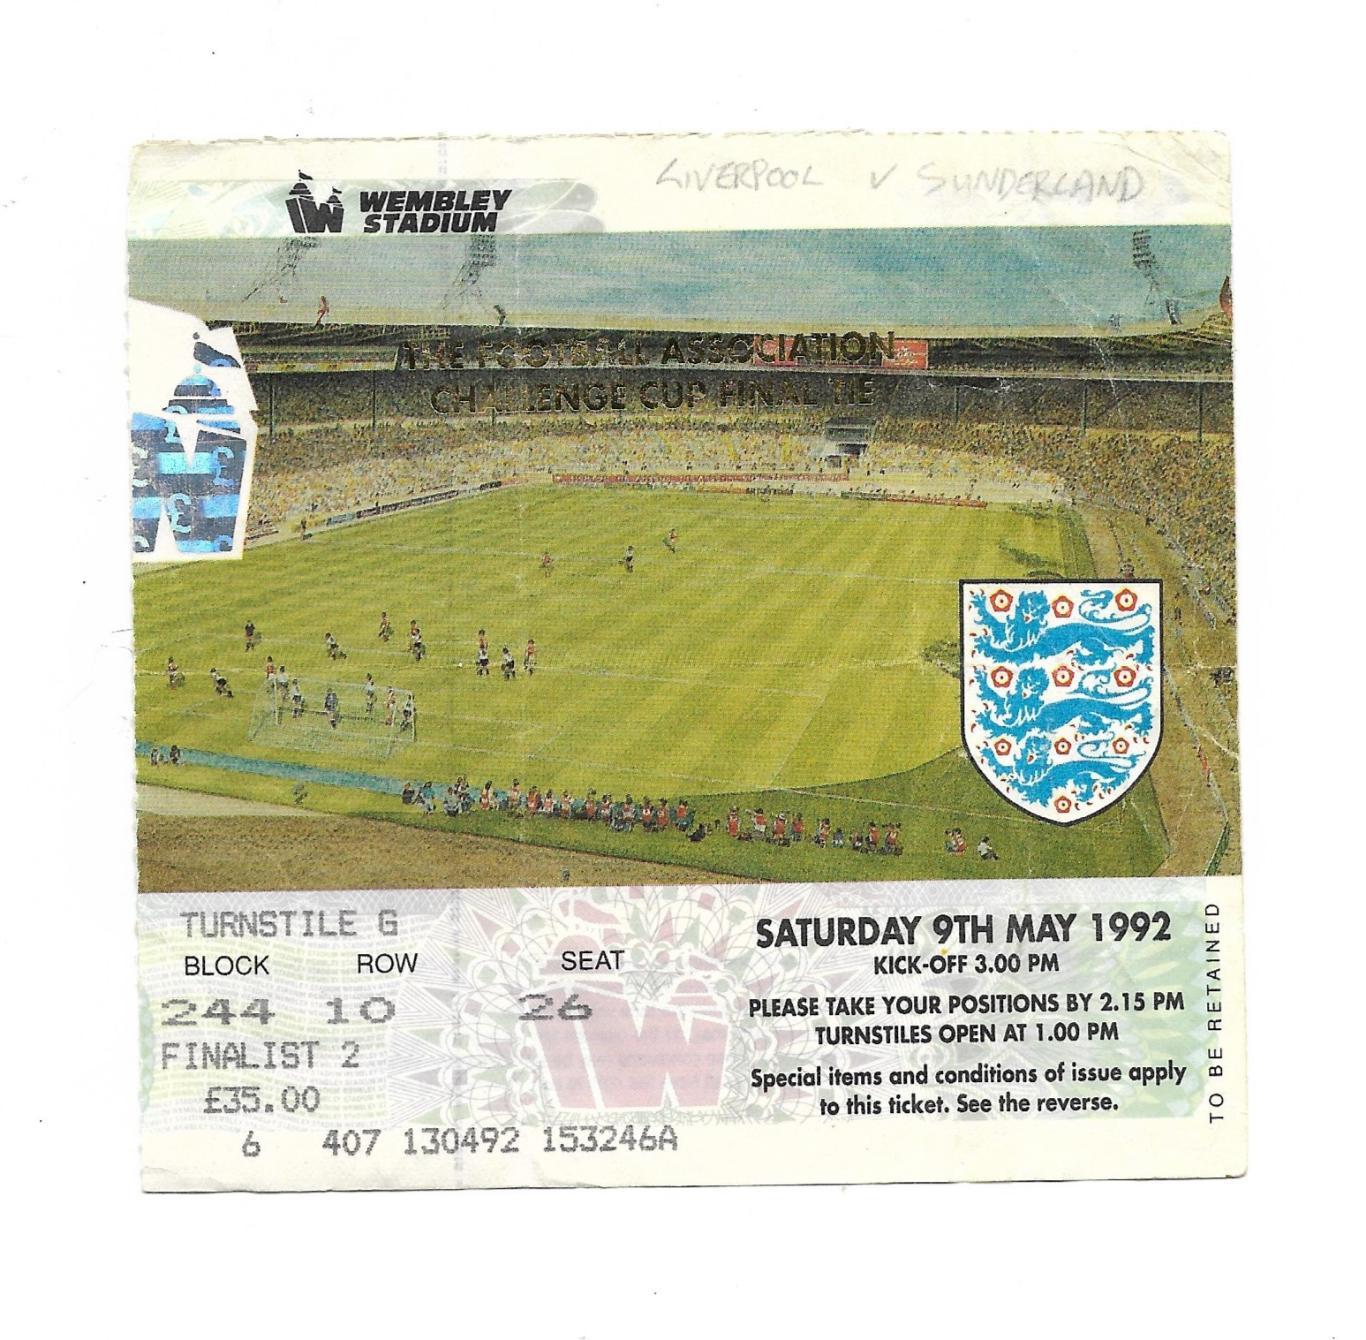 билет. liverpool v Sundarland 09.05. 1992 the FA challenge cup final tie